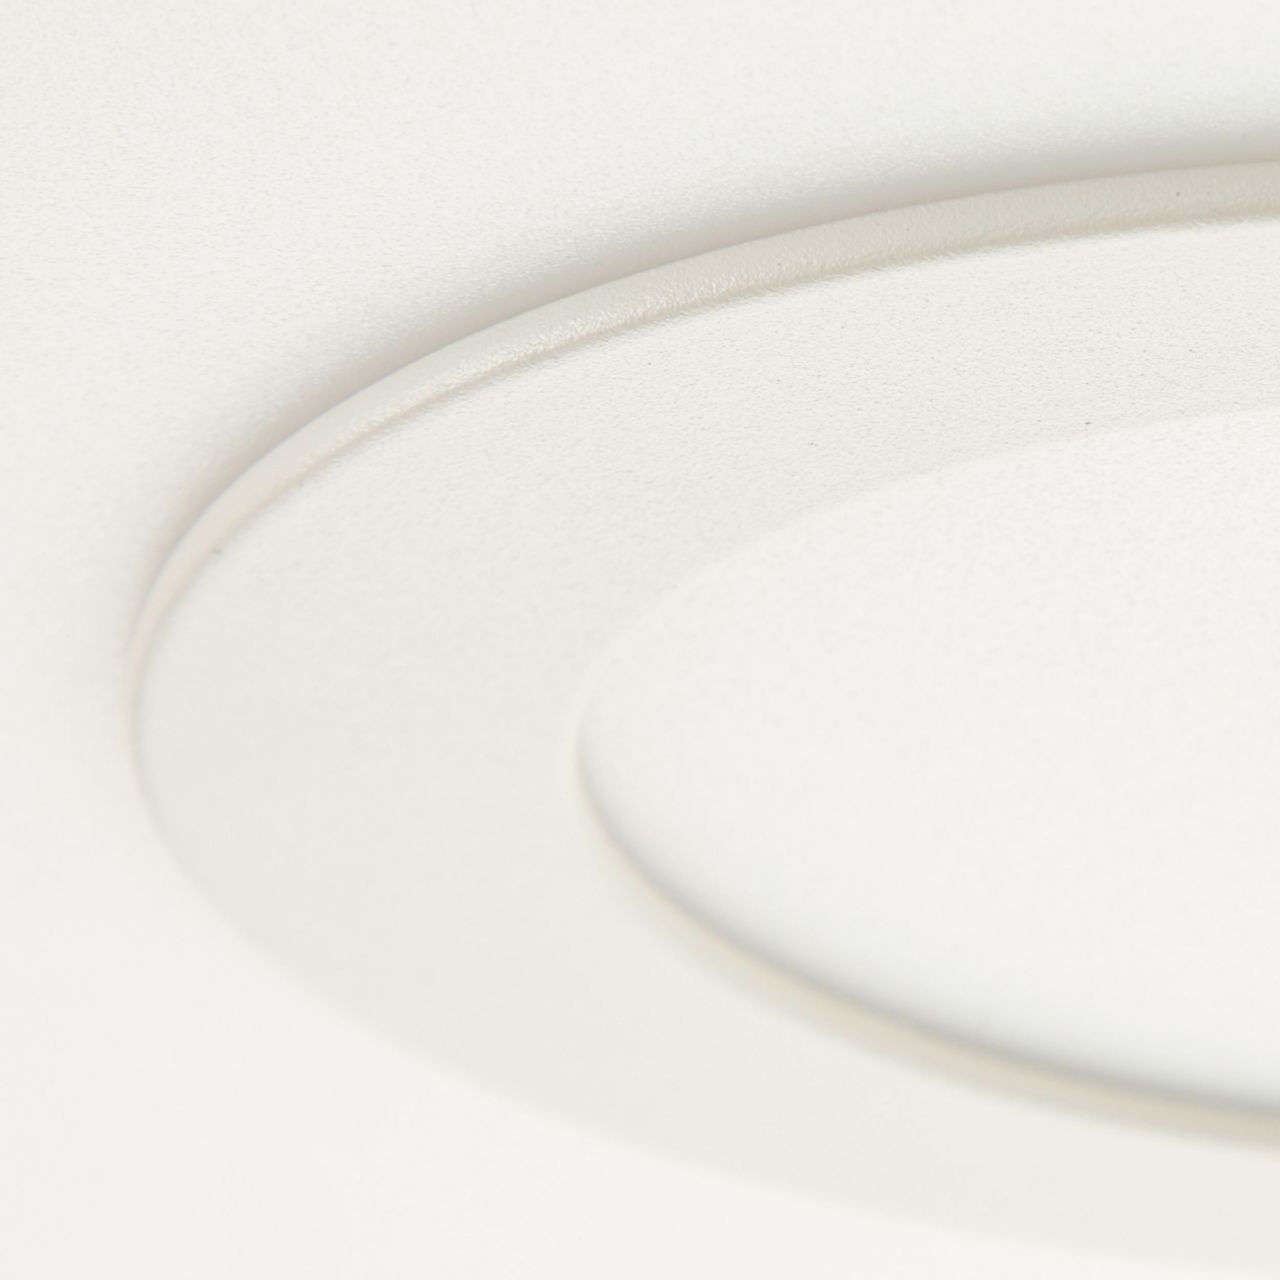 1x Brilliant weiß Odella, LED 2700-6600K, 45cm Lampe Deckenaufbau-Paneel Odella integriert LED Aufbauleuchte 24W